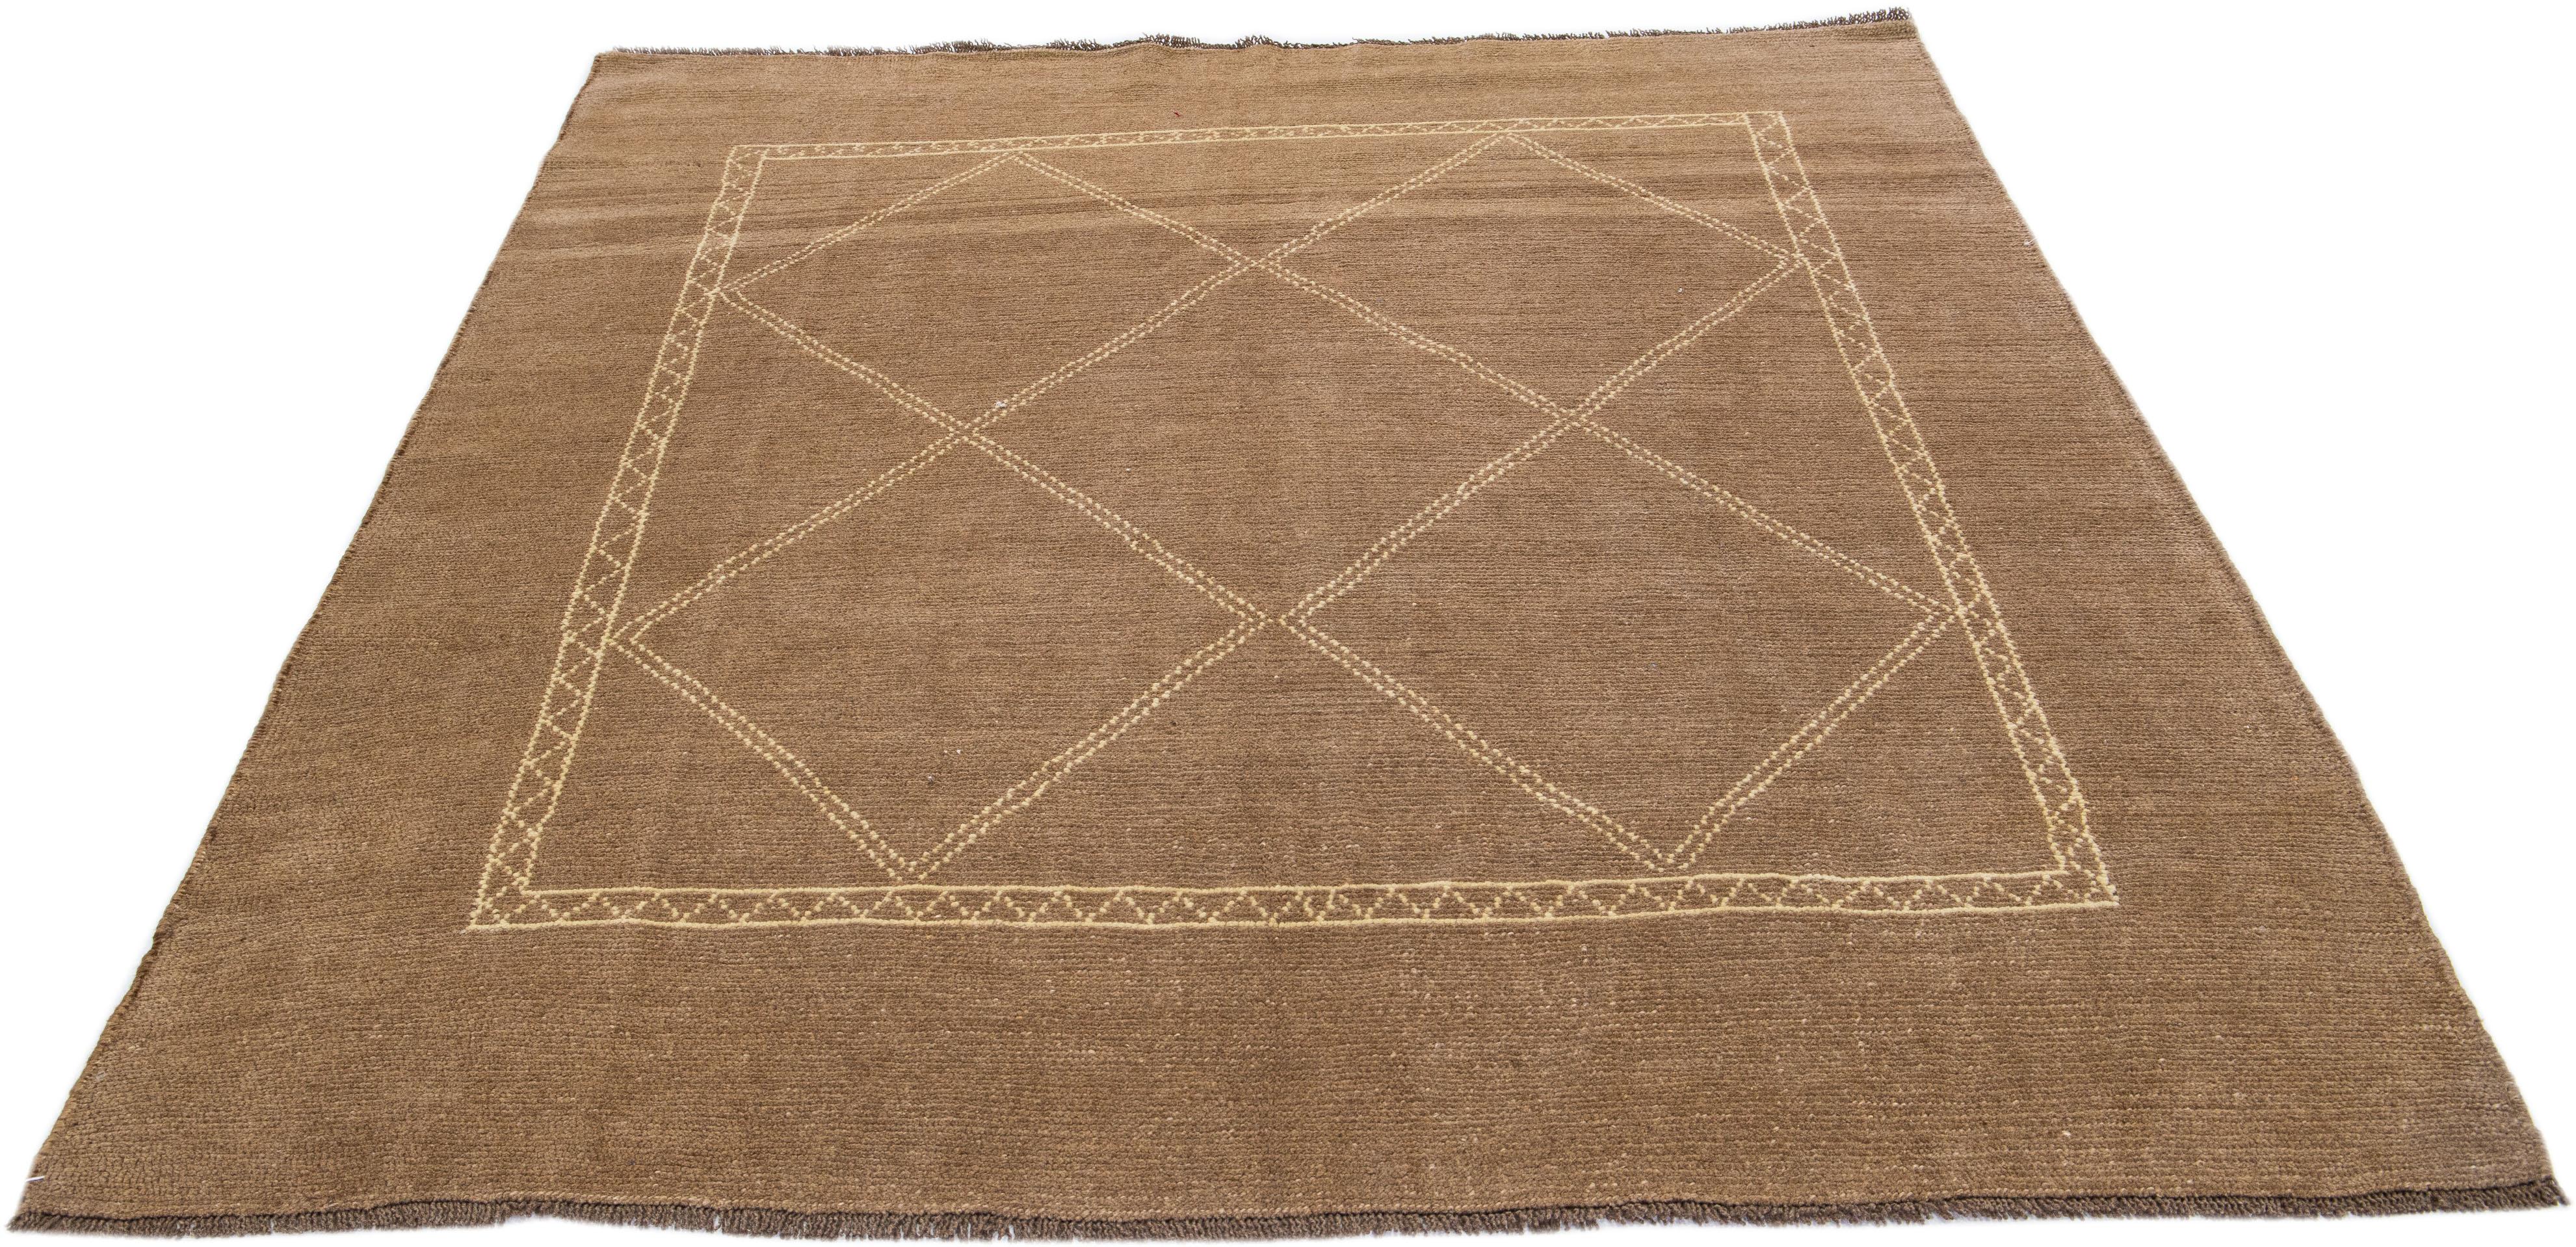 Afghan Modern Moroccan Style Light Brown Handmade Geometric Square Wool Rug by Apadana For Sale